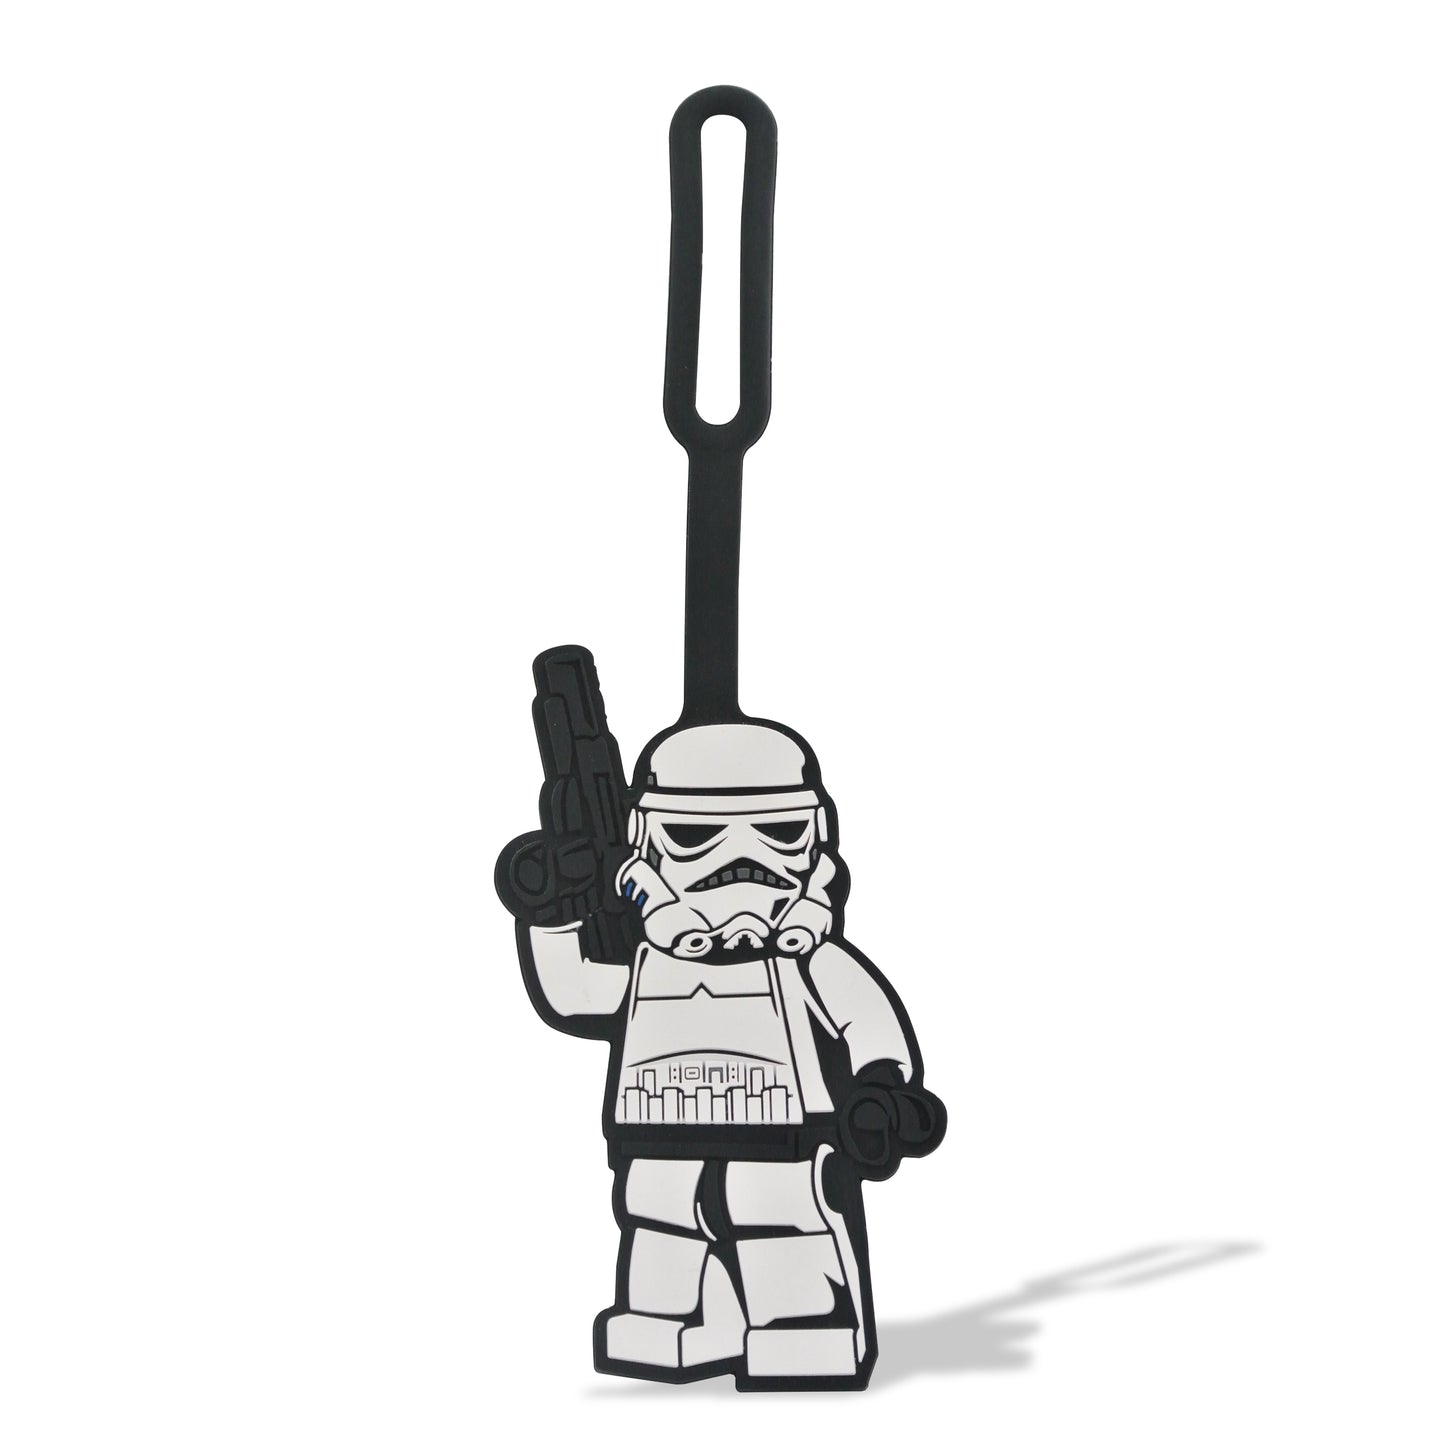 IQ LEGO® STAR WARS Stormtrooper Bag Tag (52235)